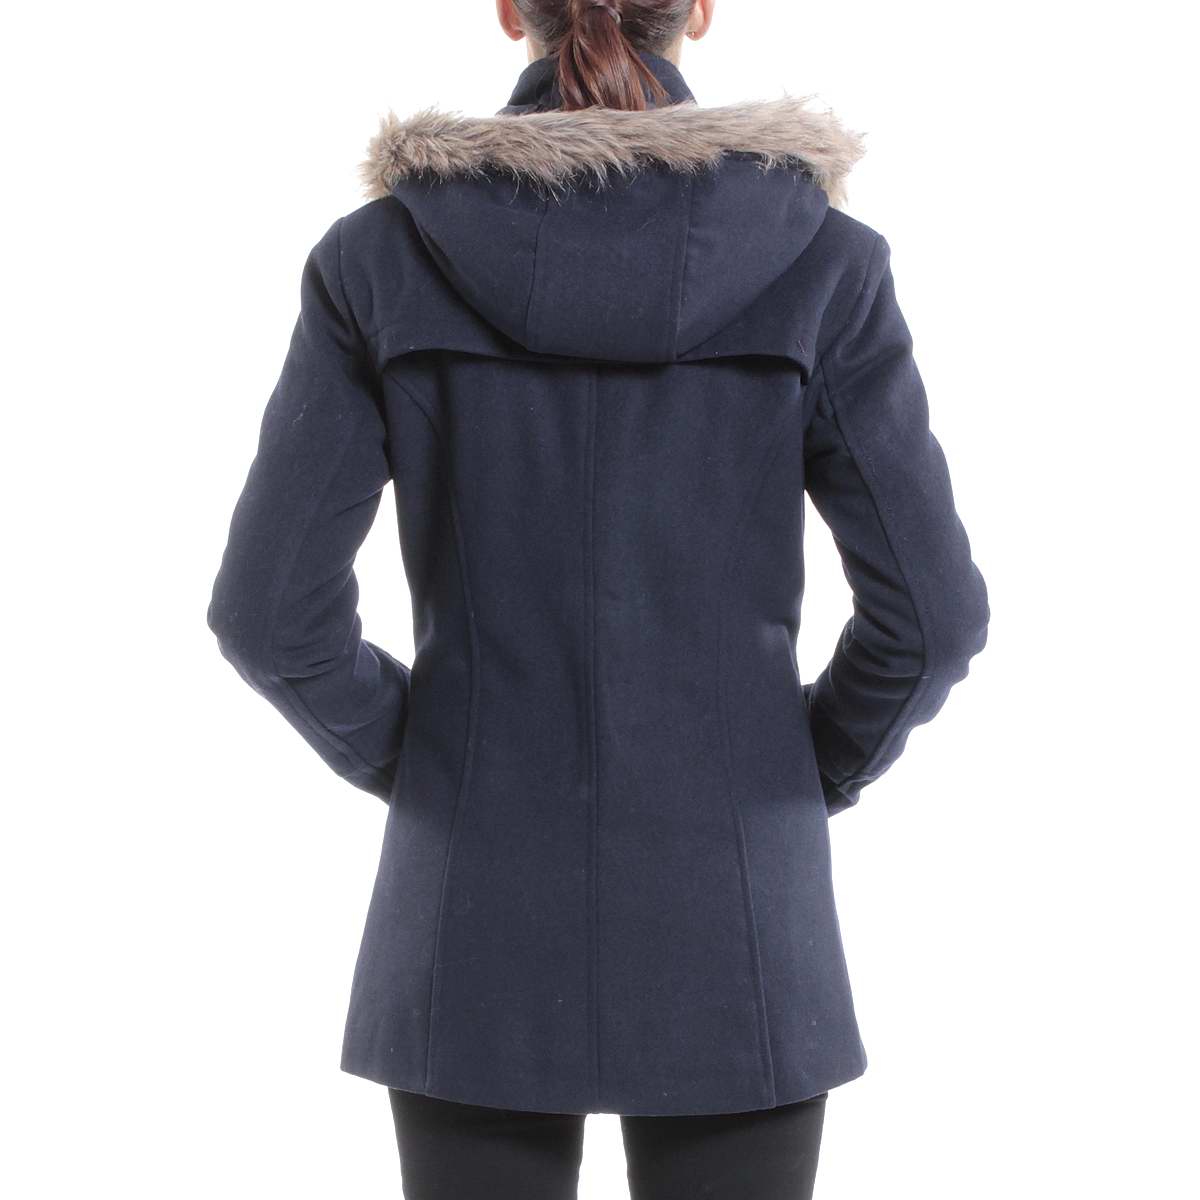 Alpine Swiss Duffy Womens Wool Coat Faux Fur Trim Hooded Parka Jacket - image 3 of 8